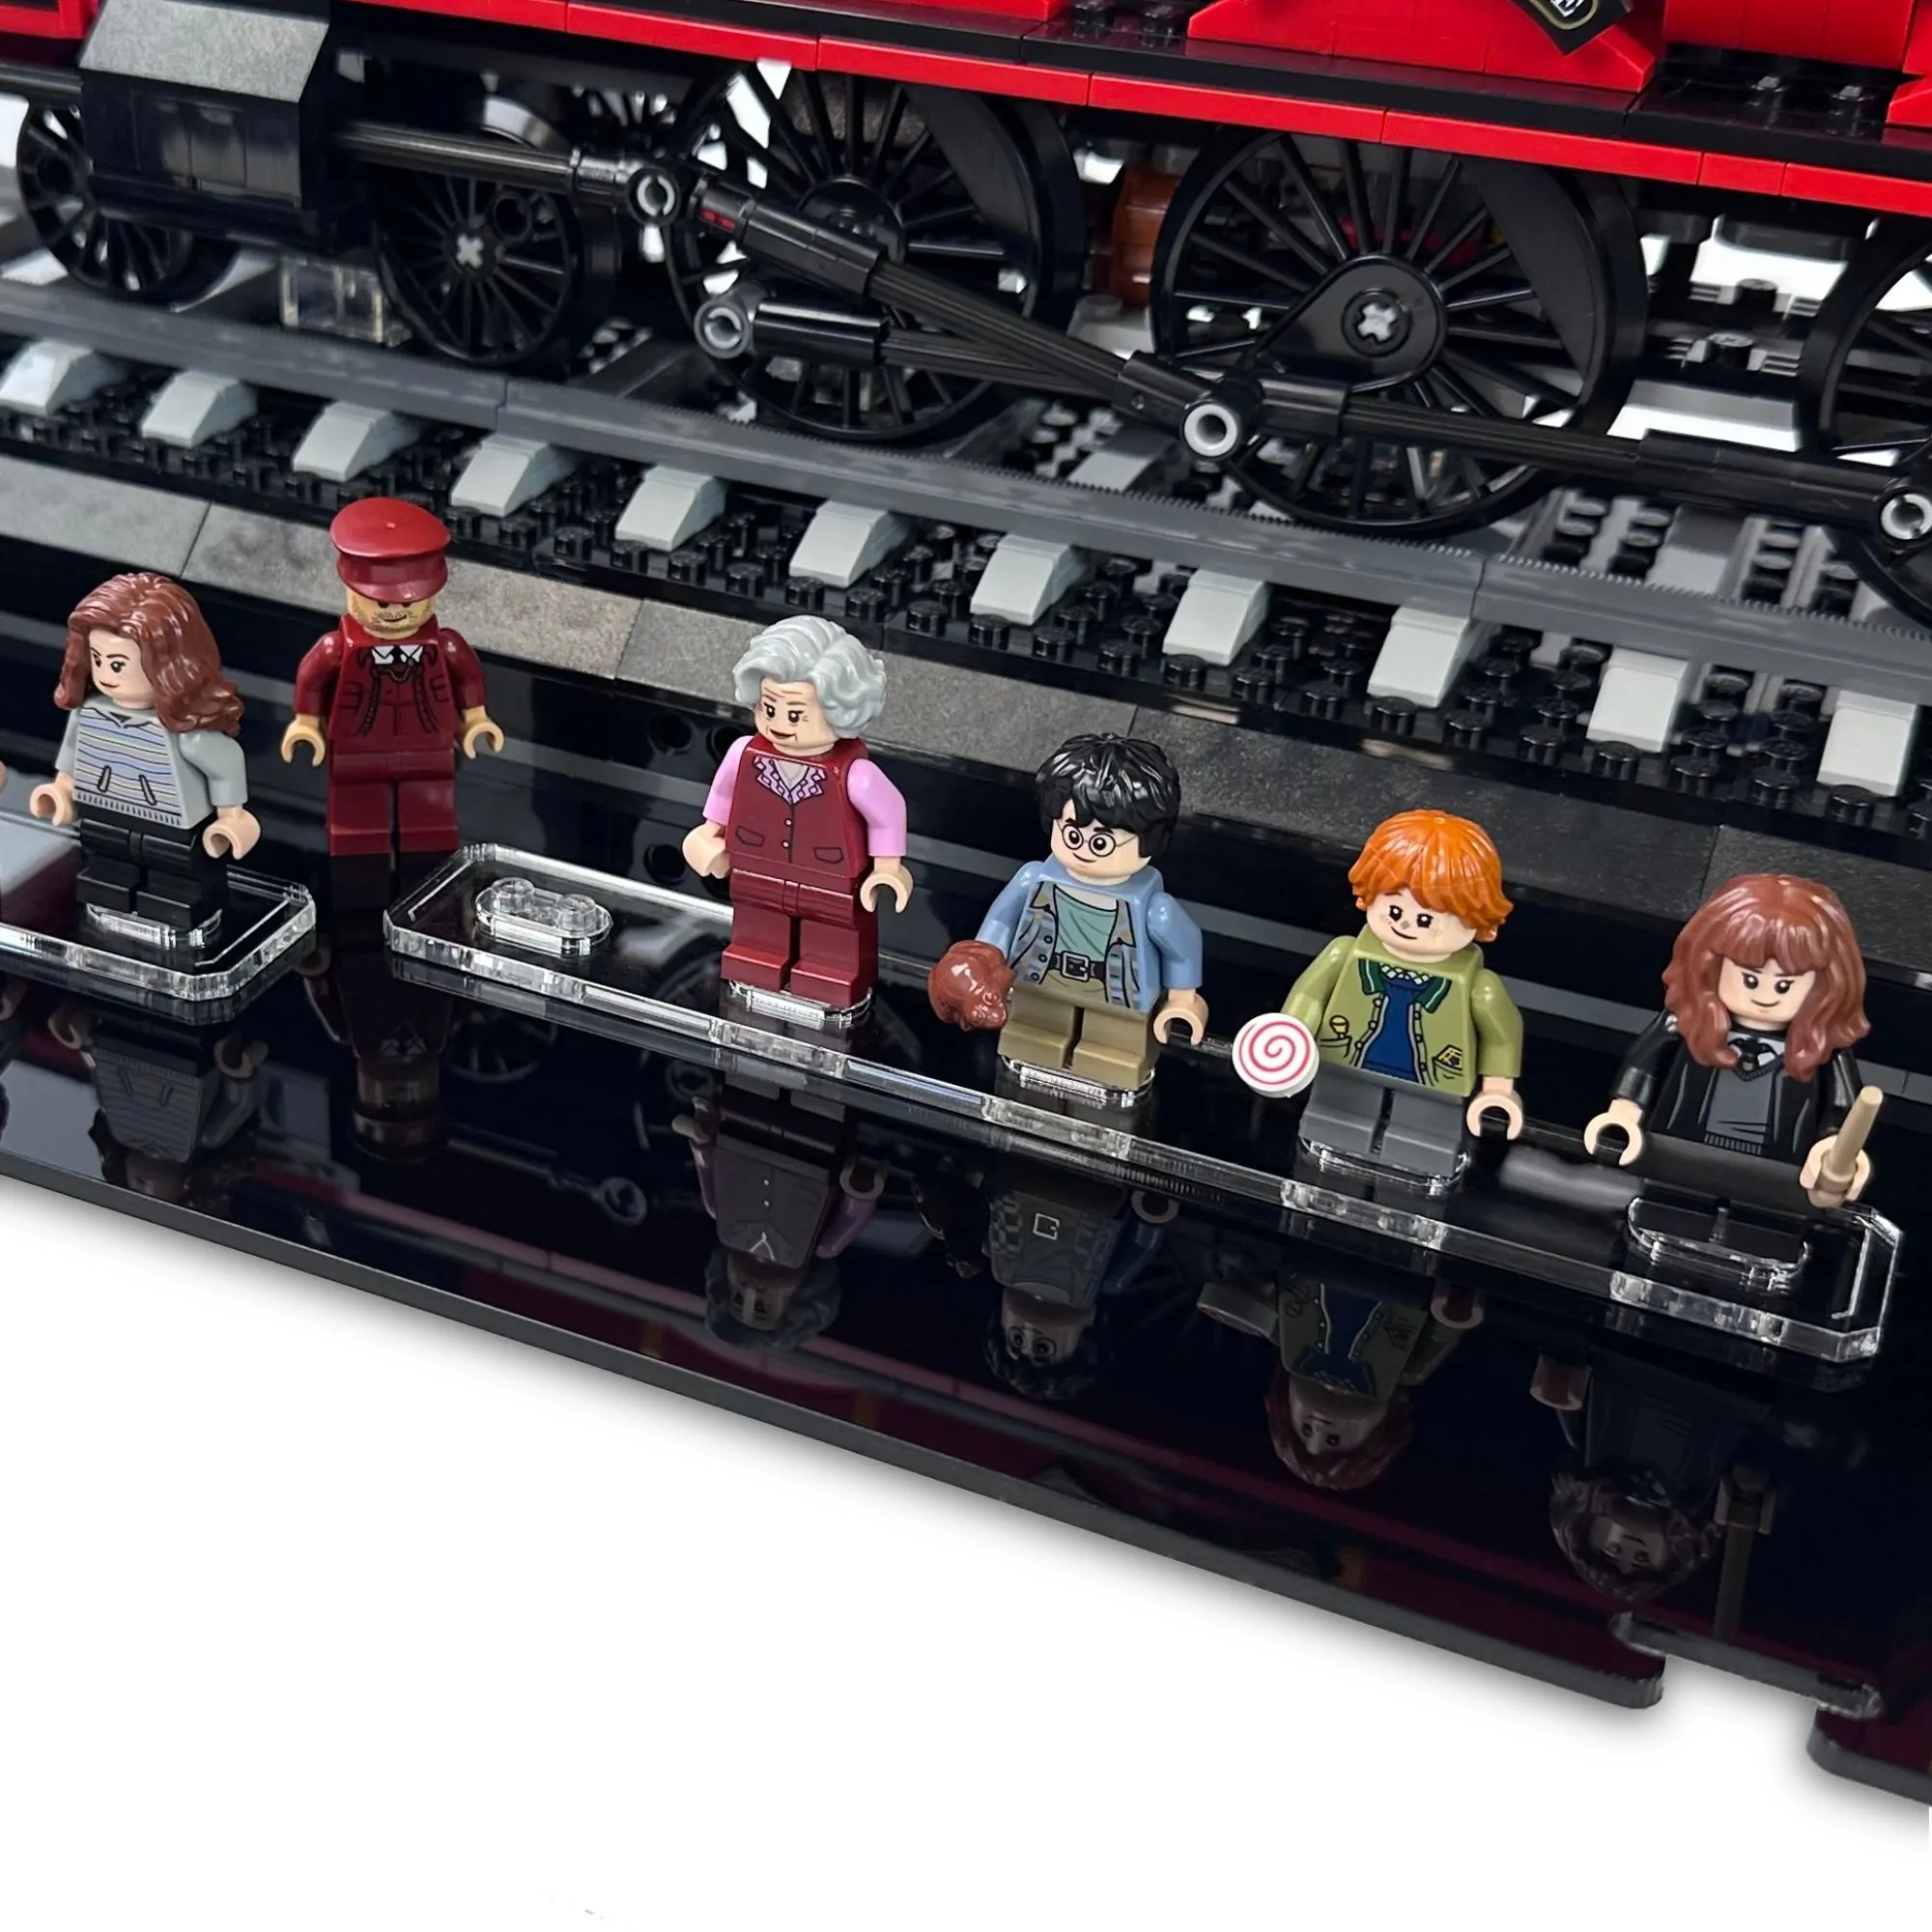 Acrylic Display Case for LEGO Hogwarts Express CE